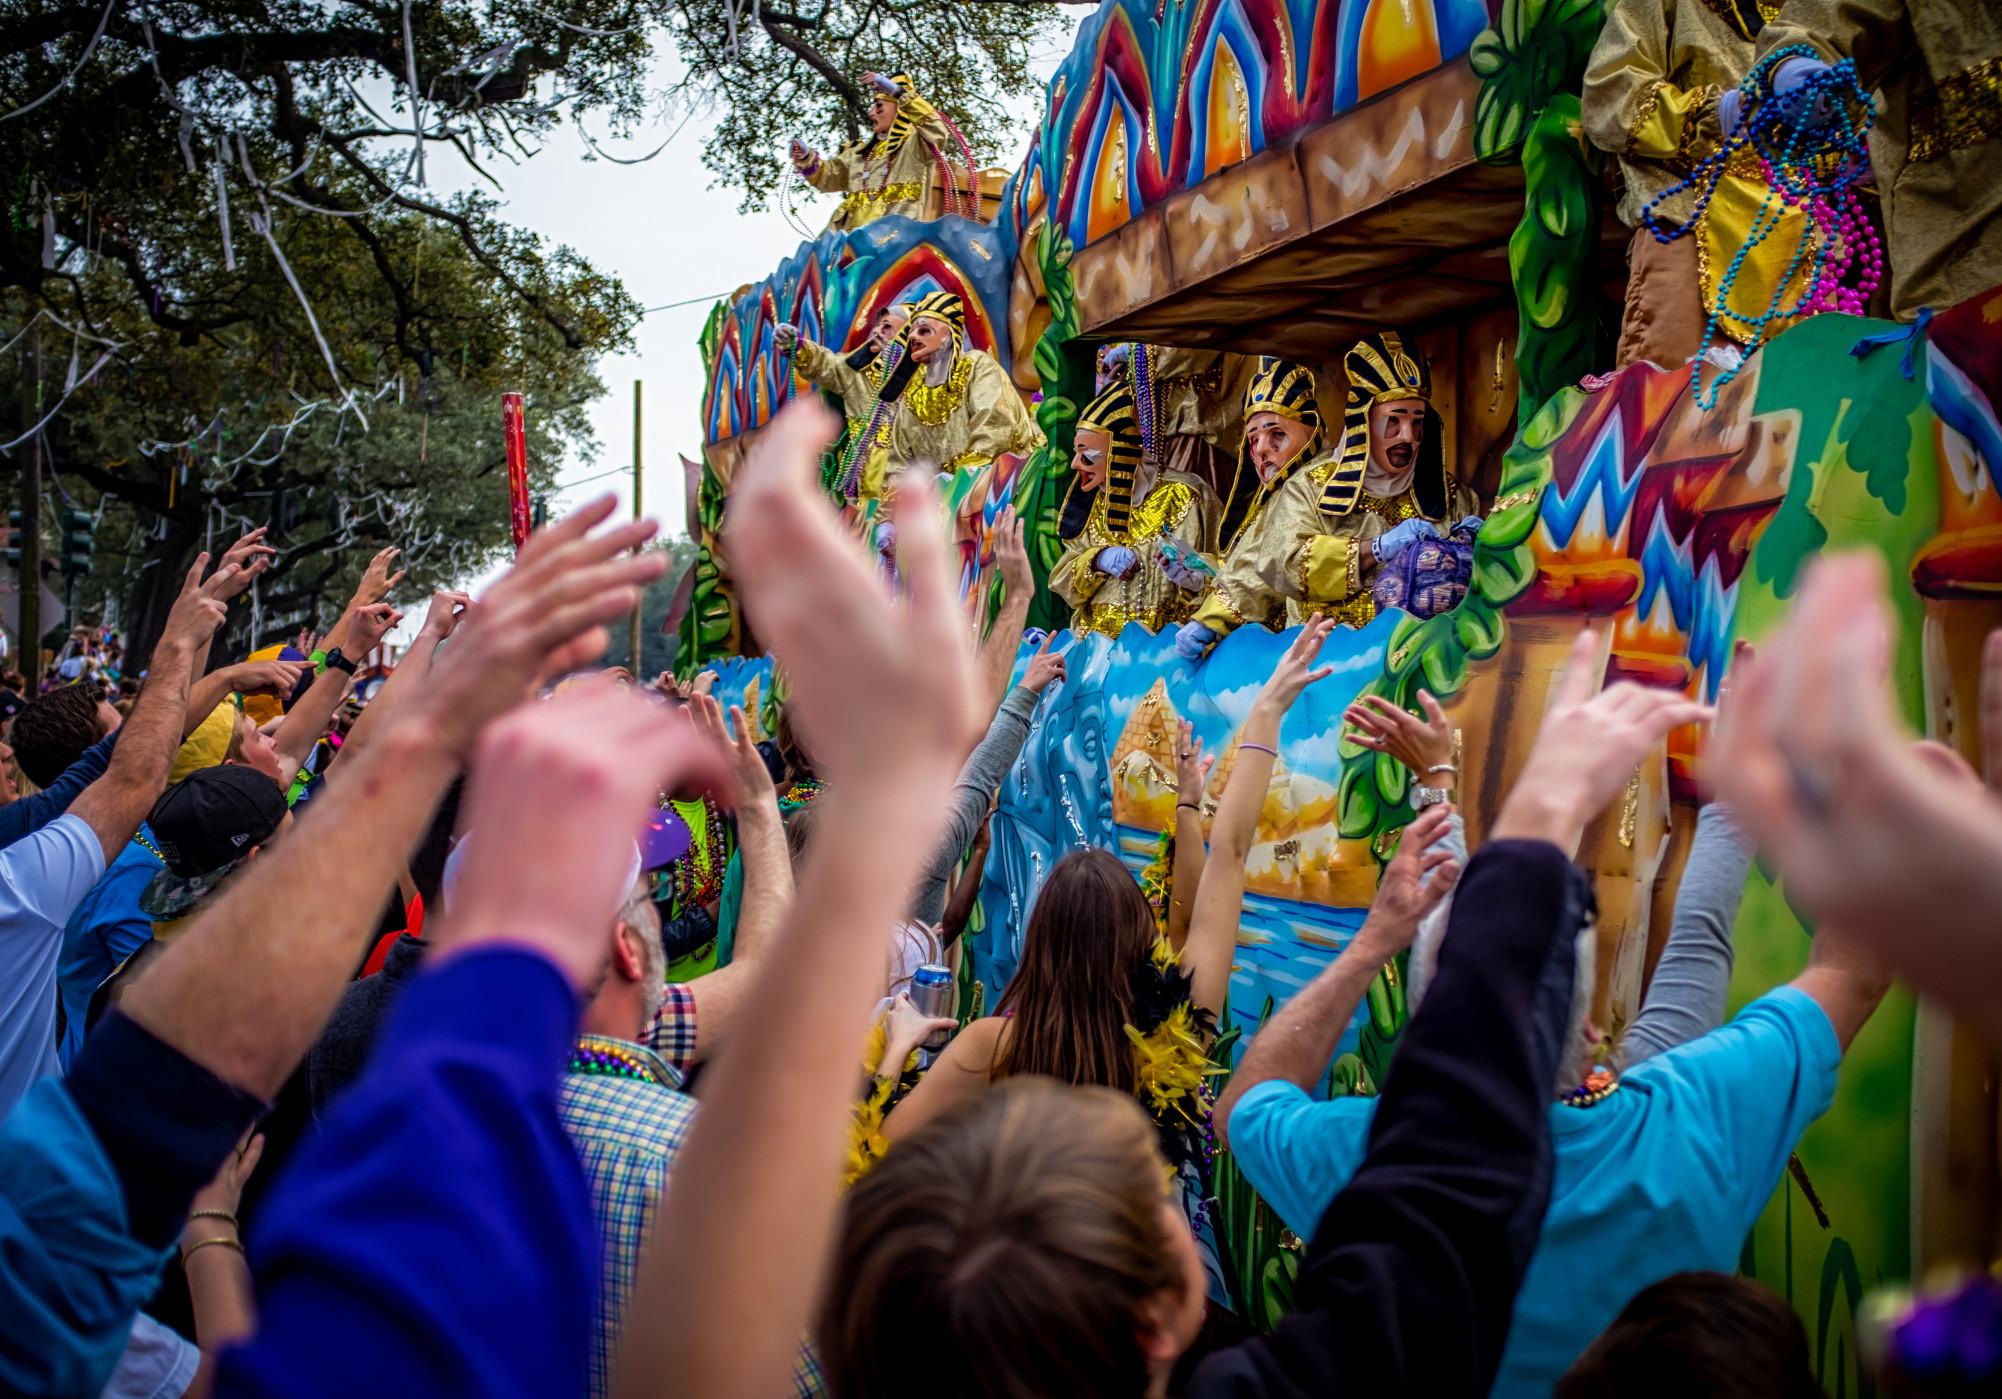 Colorful floats of the Mardi Gras celebration